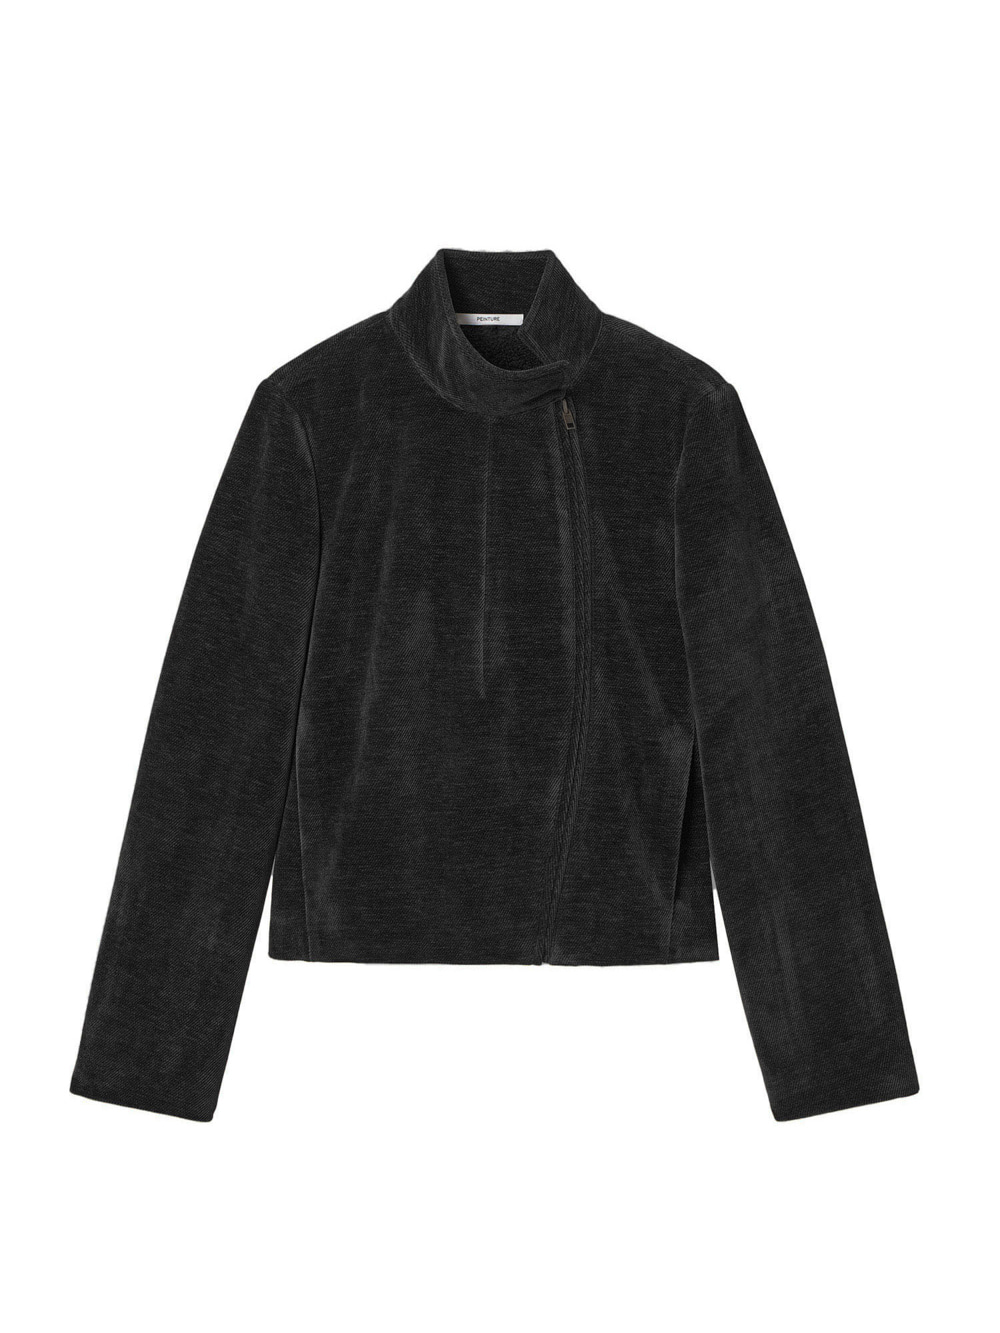 Shearing Asymmetrical Jacket - Black